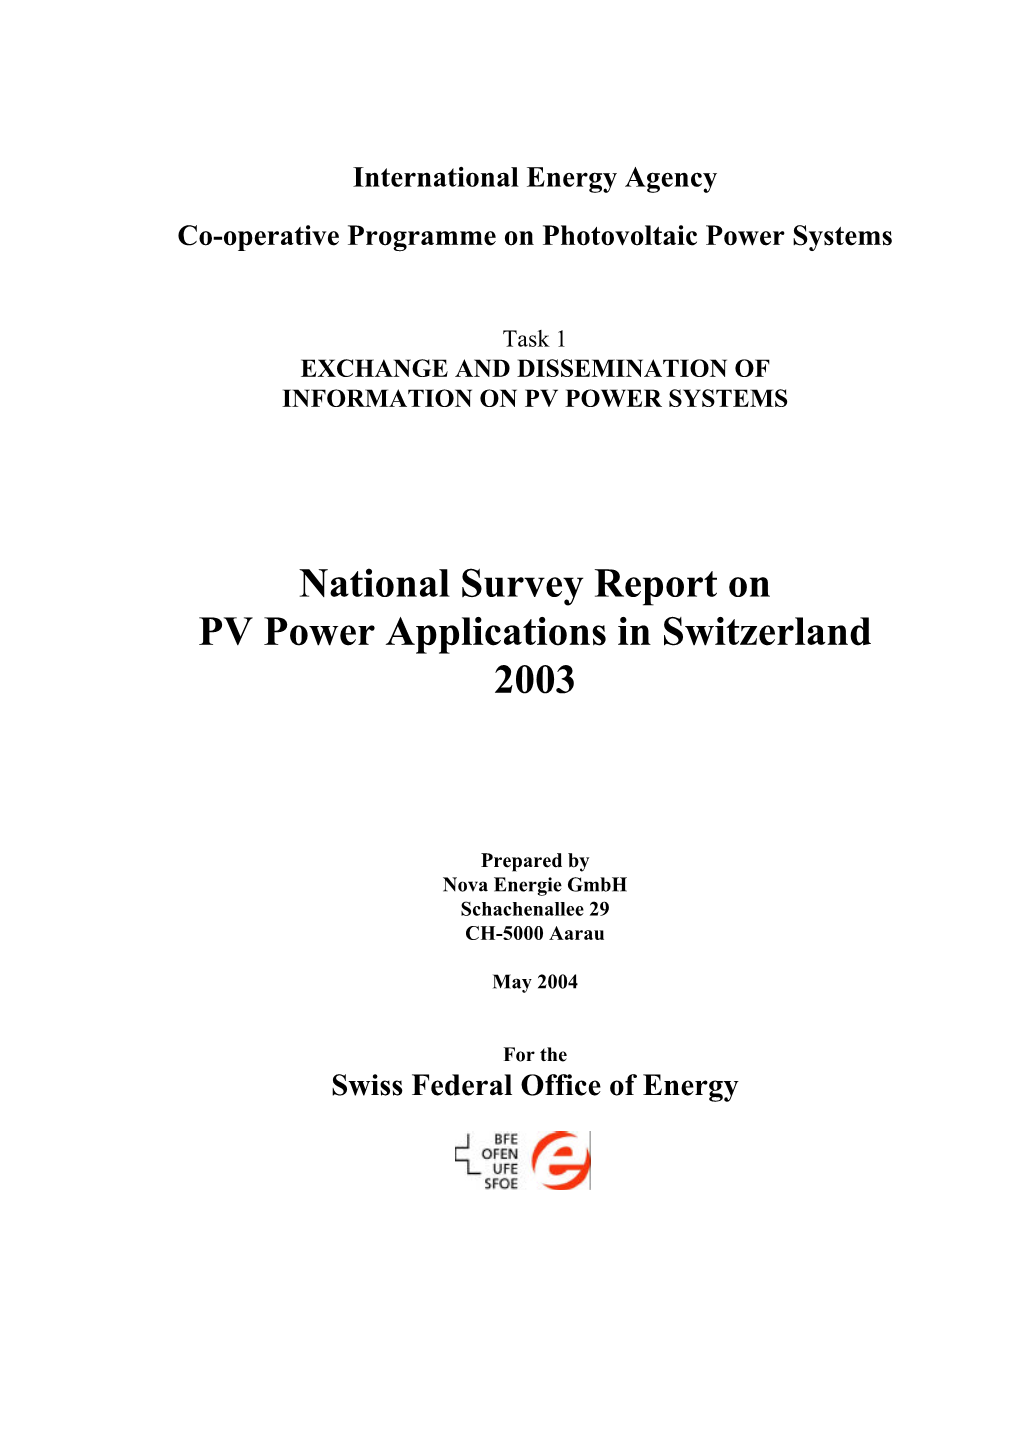 National Survey Report Switzerland 2003